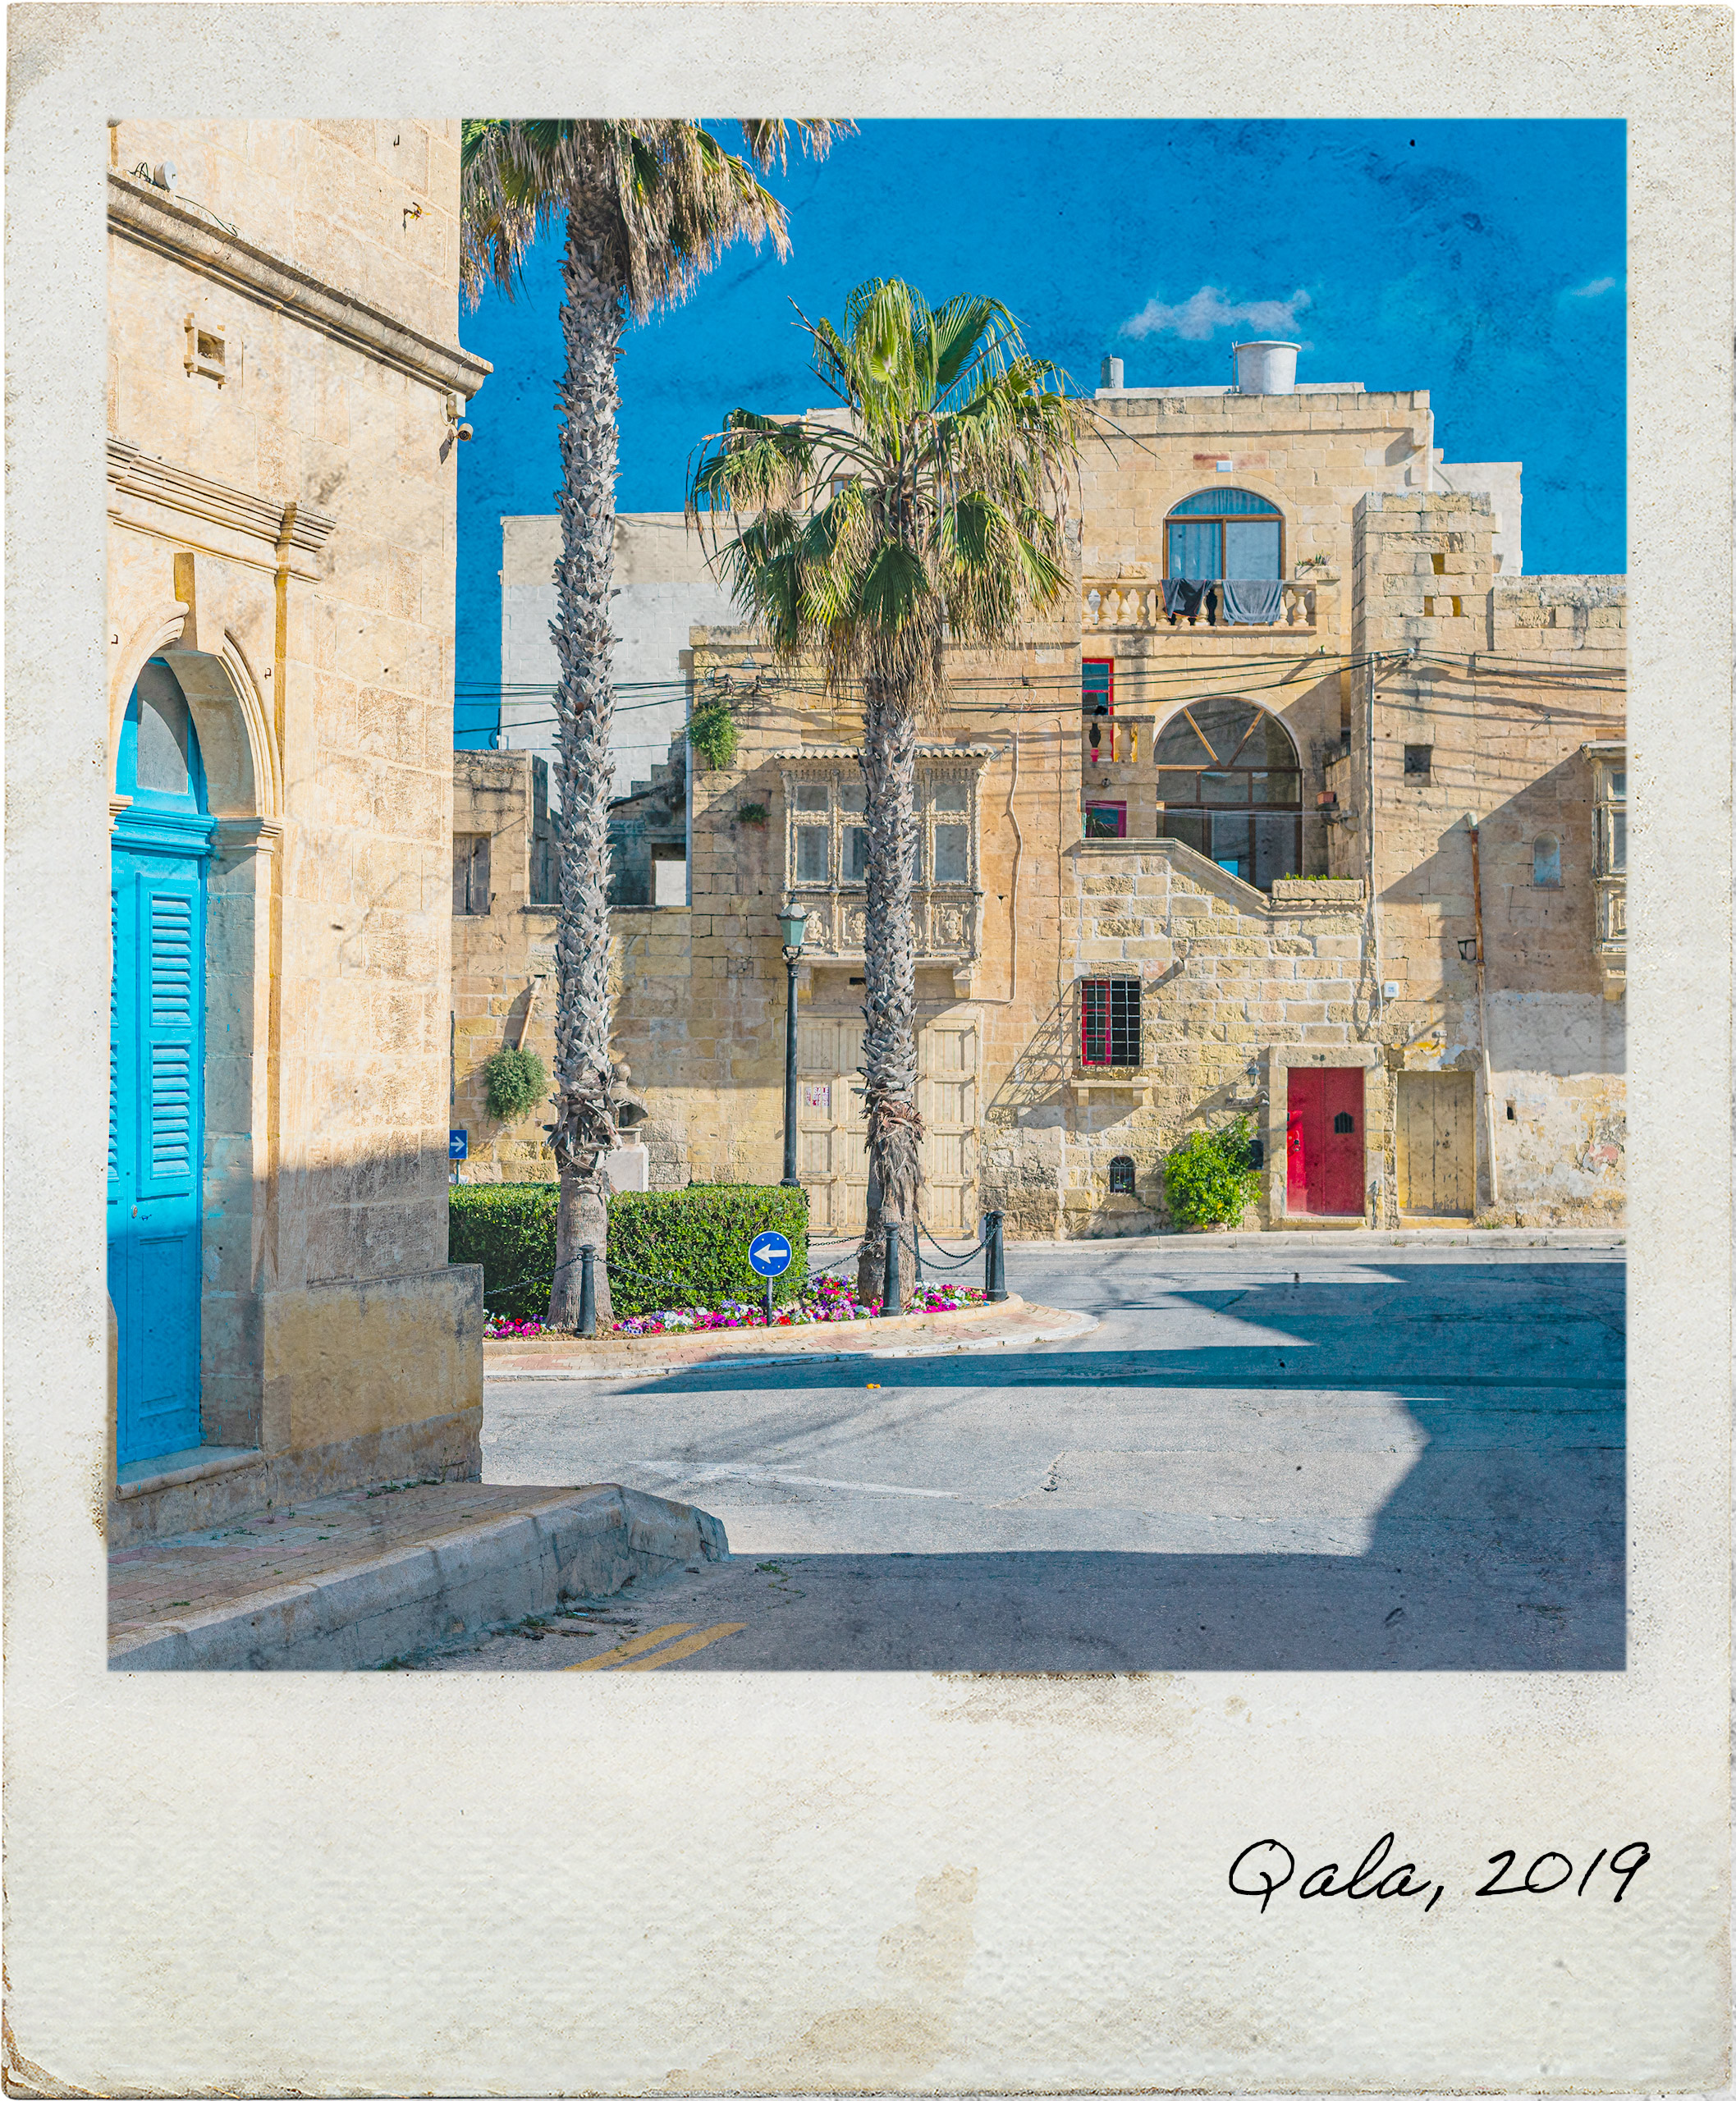 Old buildings in Qala, Gozo island